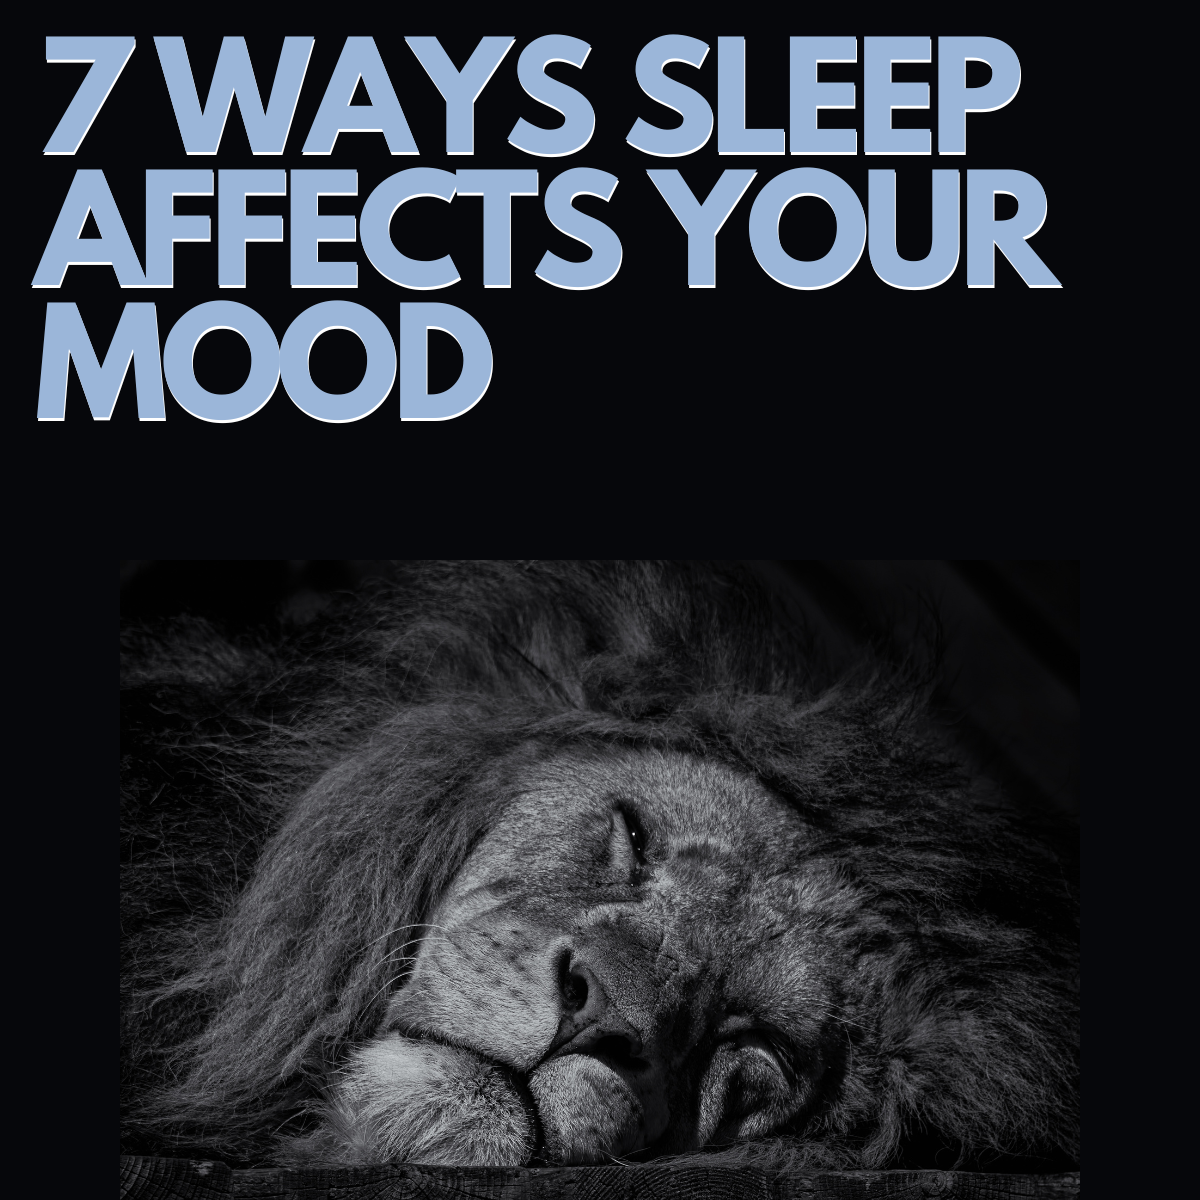 7 Ways Sleep Affects Your Mood